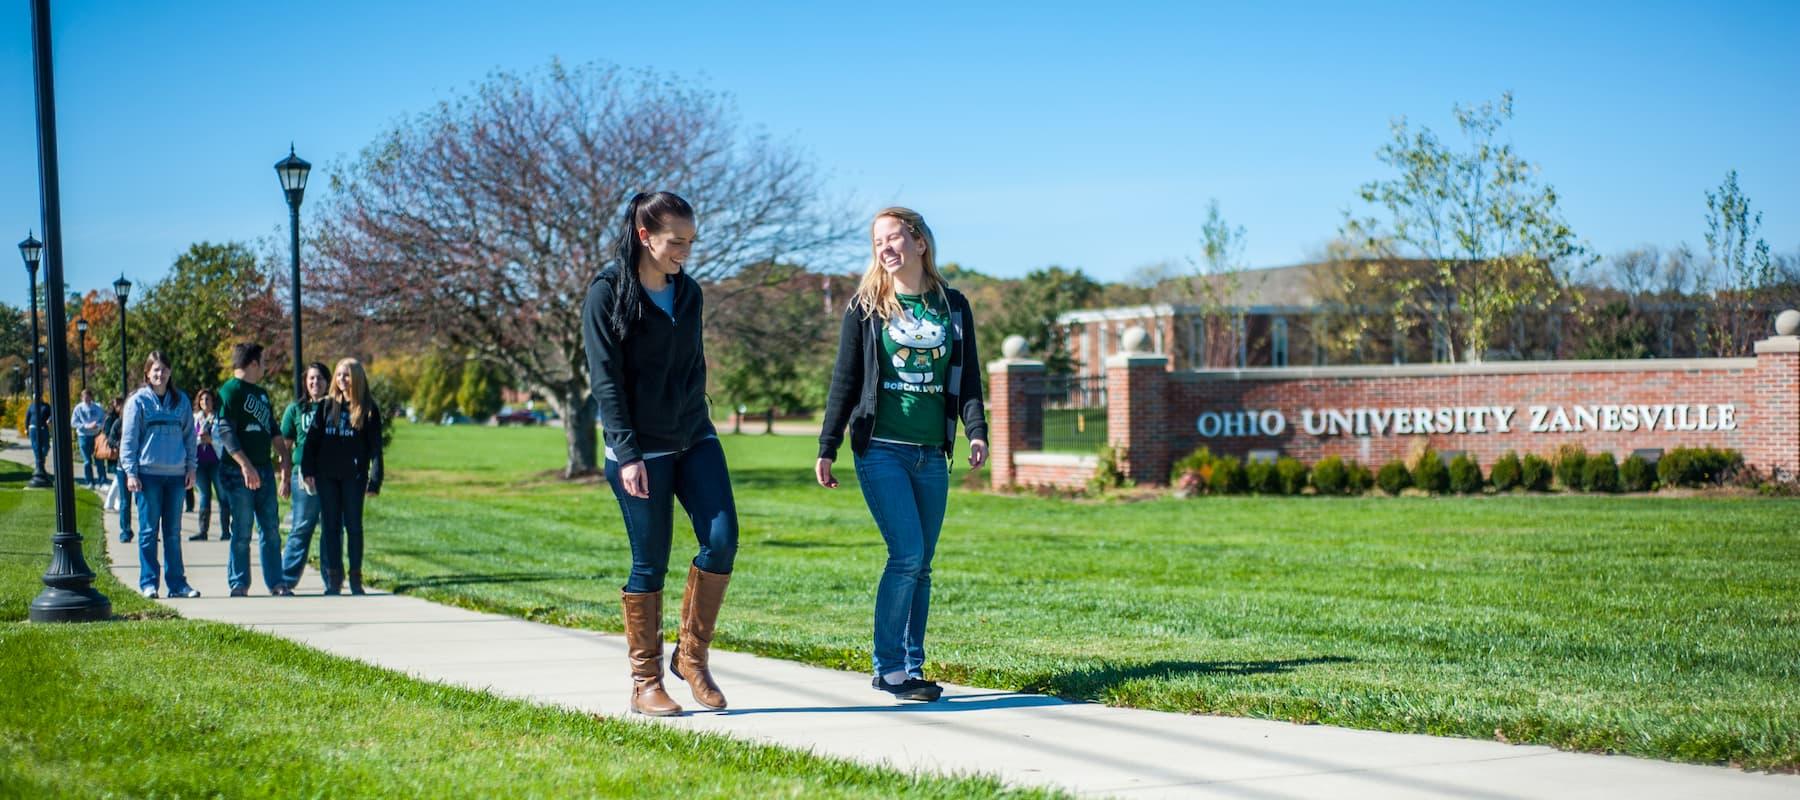 Students walk along a sidewalk at Ohio University's Zanesville campus.